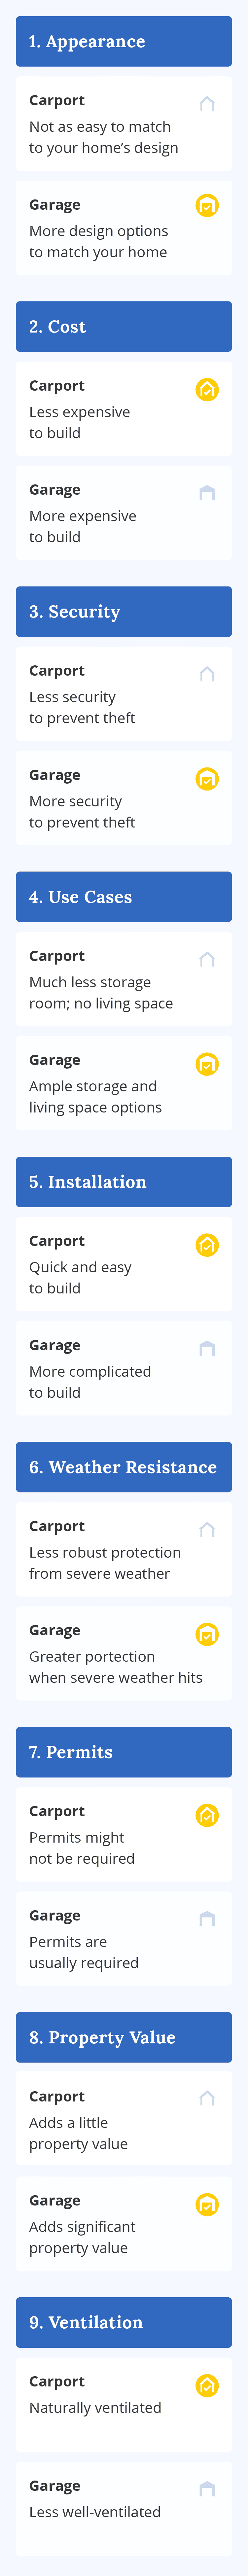 carport vs garage comparison chart